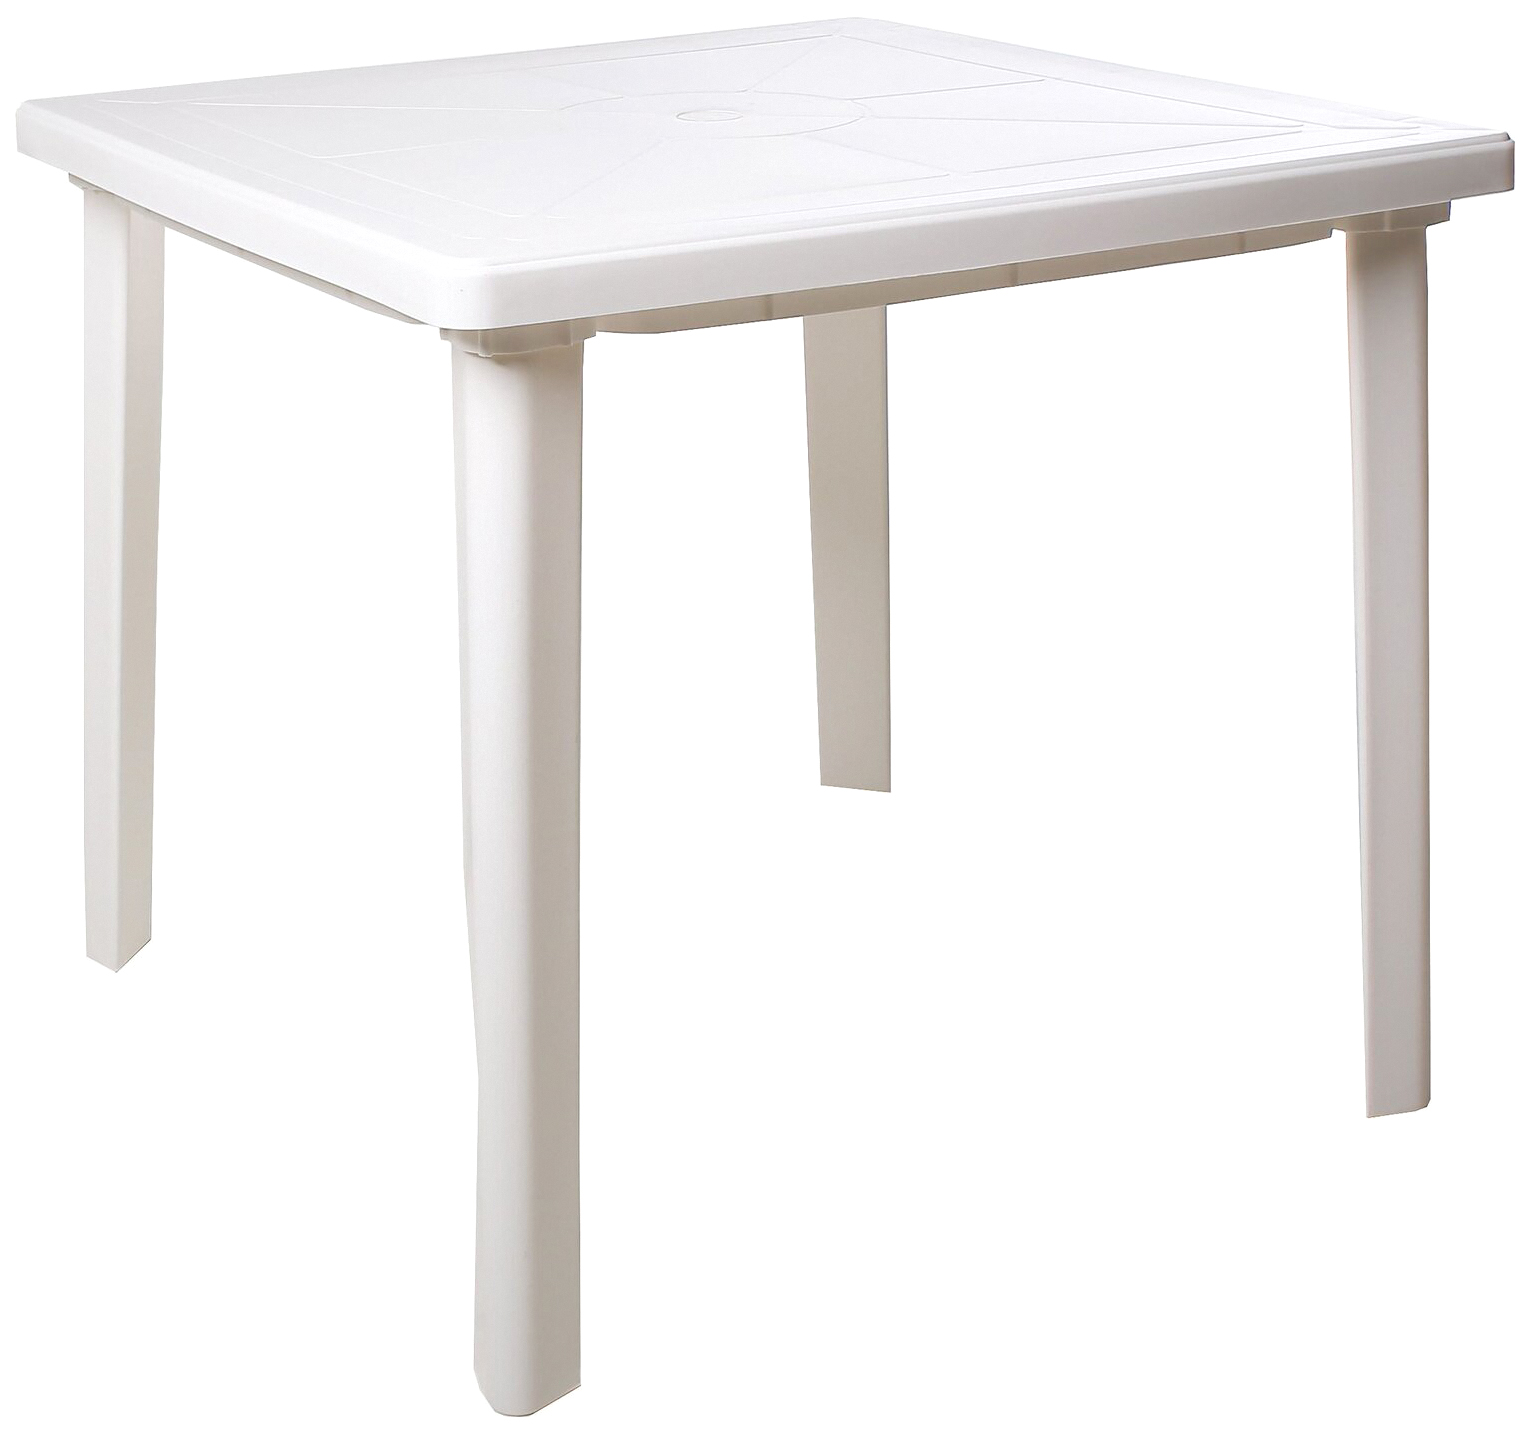 Стол для дачи обеденный Стандарт Пластик 400140б white 80x80x71 см